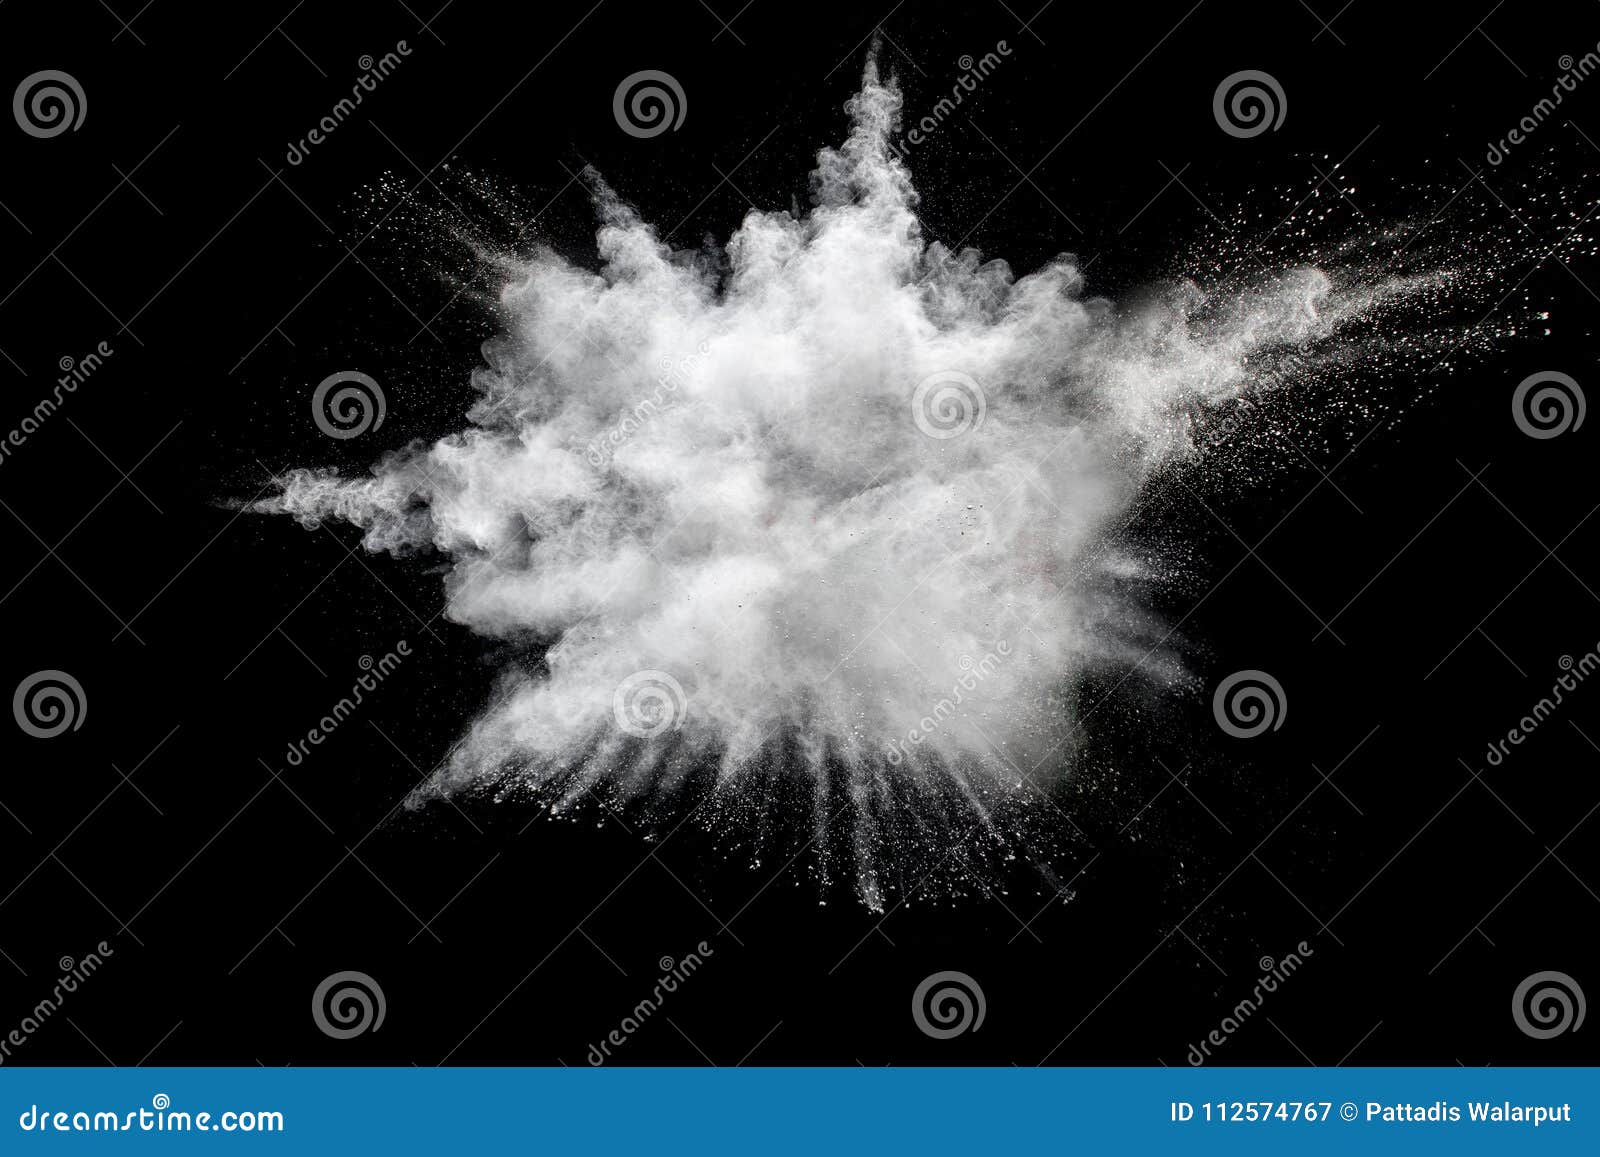 white powder explosion on black background.stopping the movement of white powder on dark background.